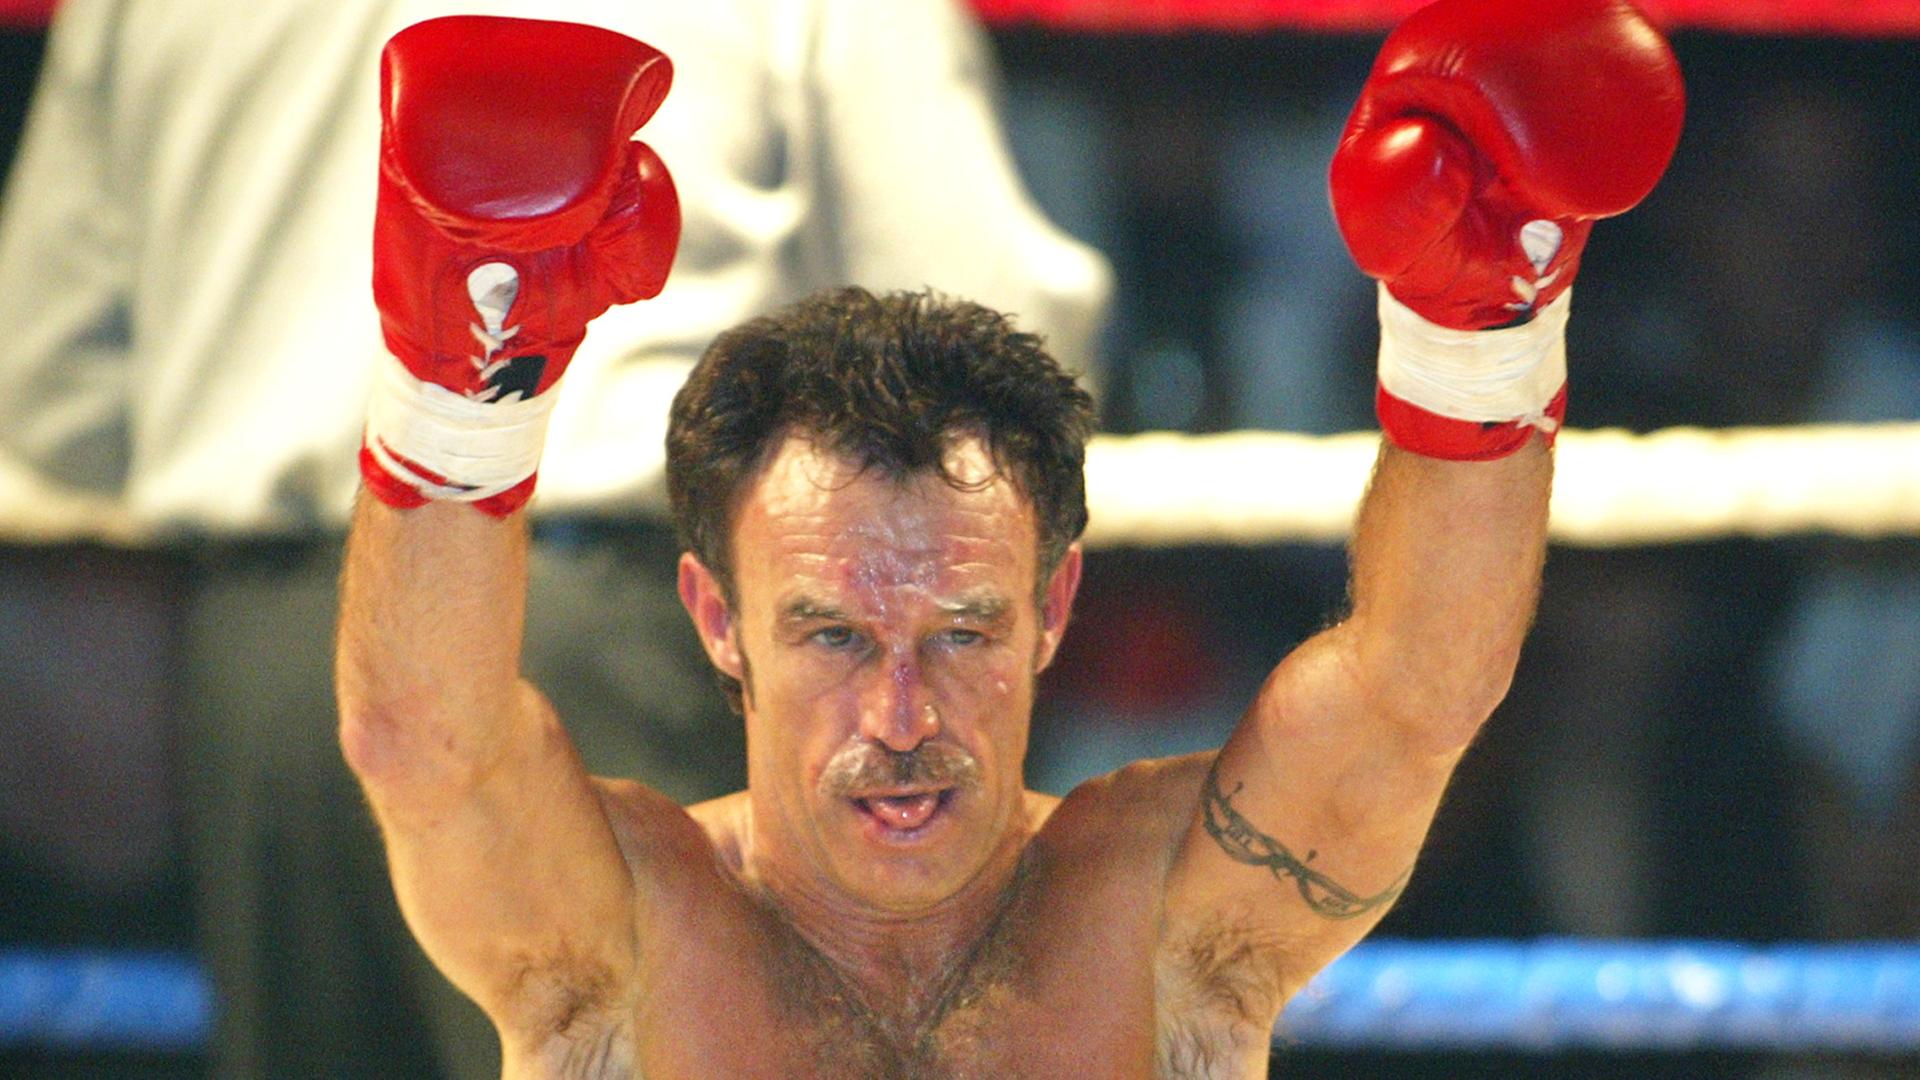 Der Boxer Rene Weller jubelt nach seinem Comeback-Kampf in Berlin am Sonntag, 23. Februar, 2003.